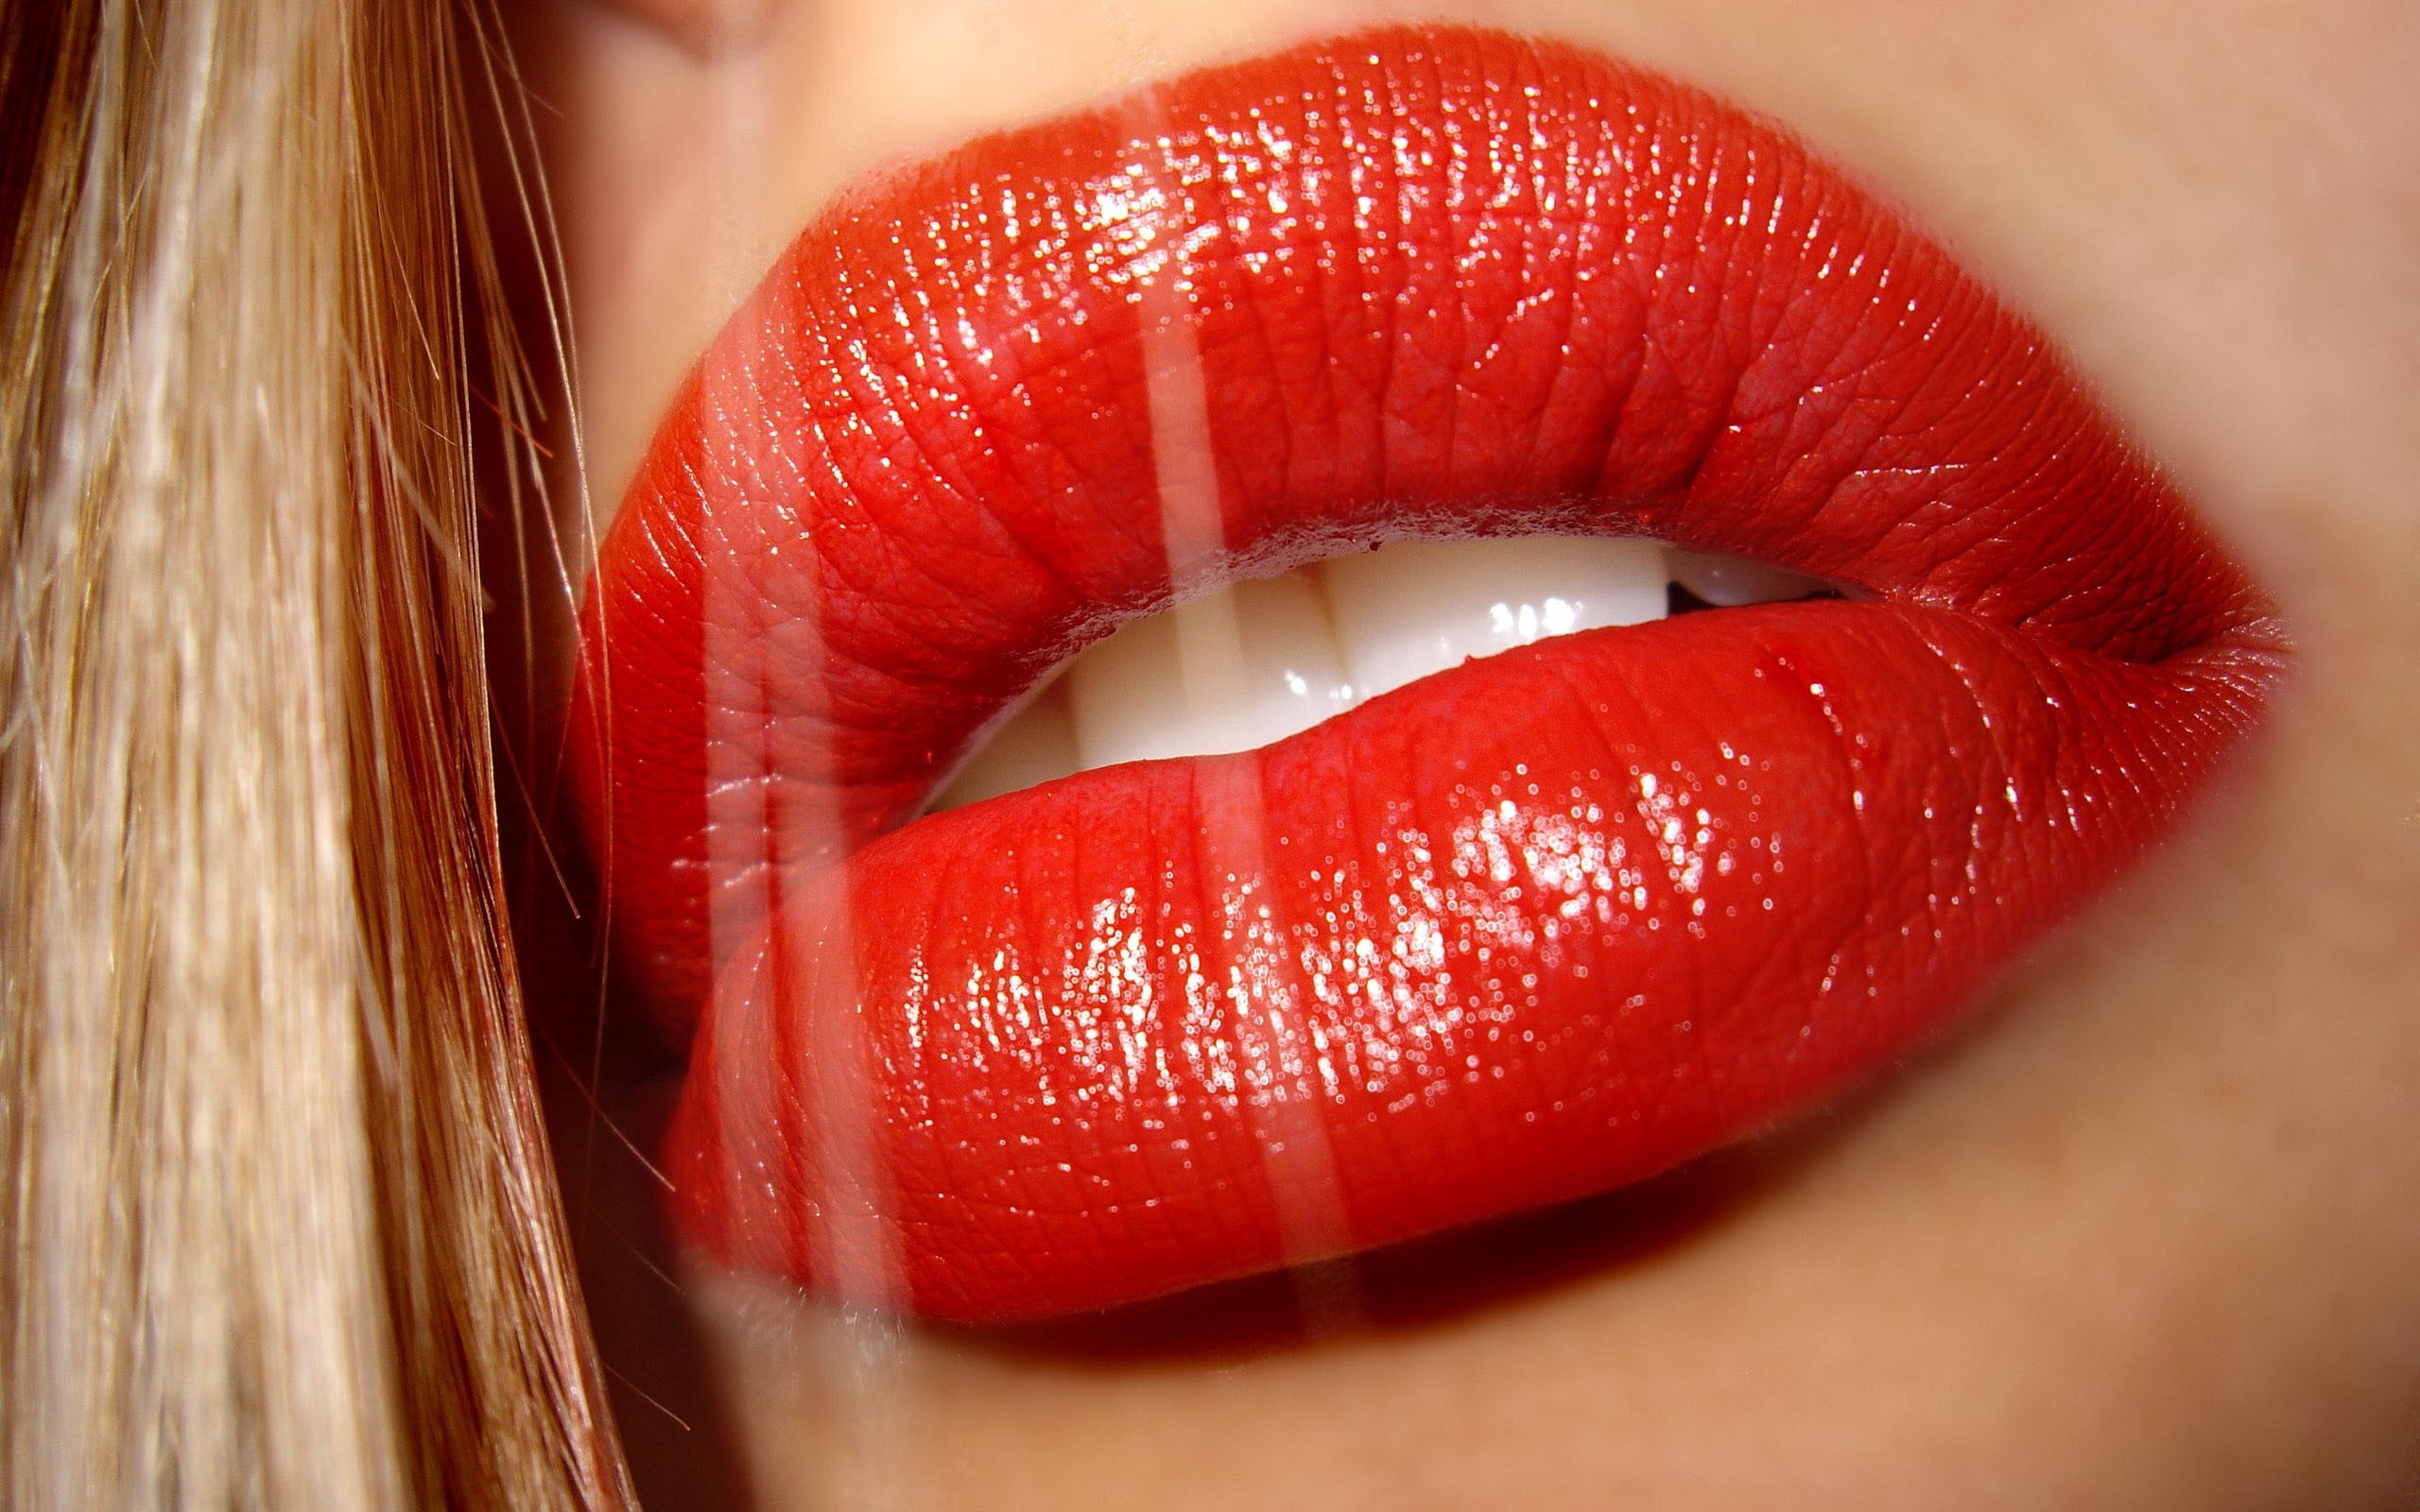 2. Short blonde hair selfie with red lipstick - wide 7